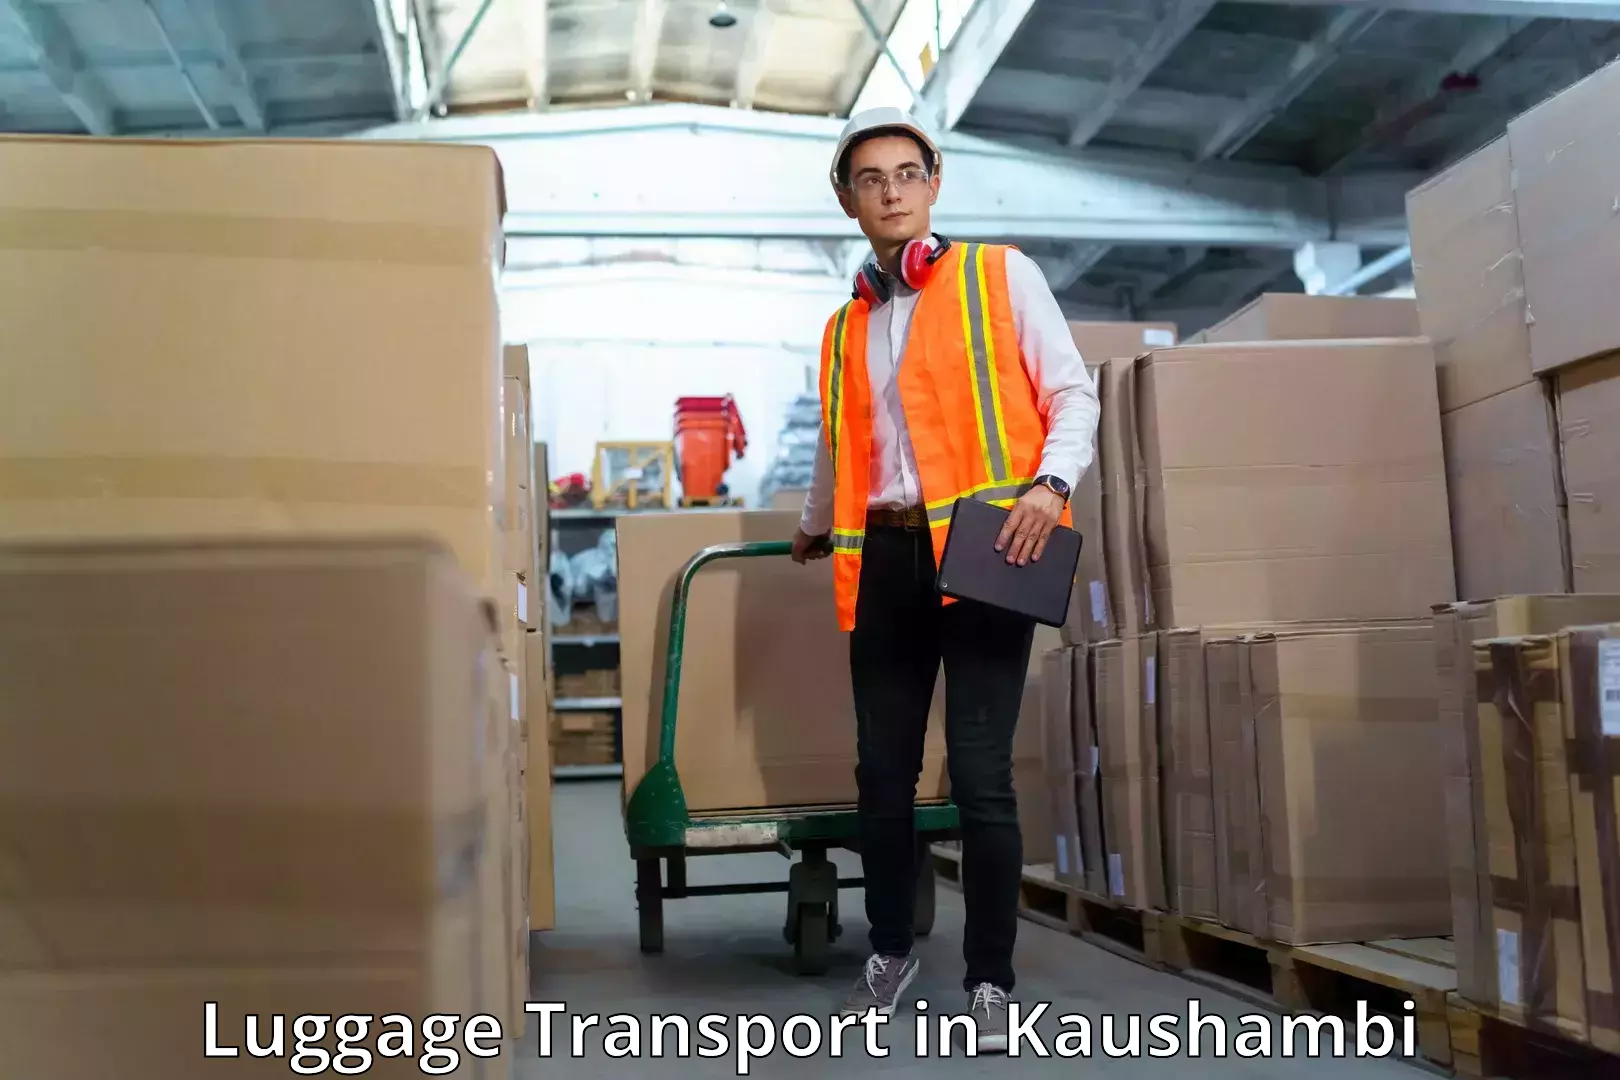 Doorstep luggage collection in Kaushambi